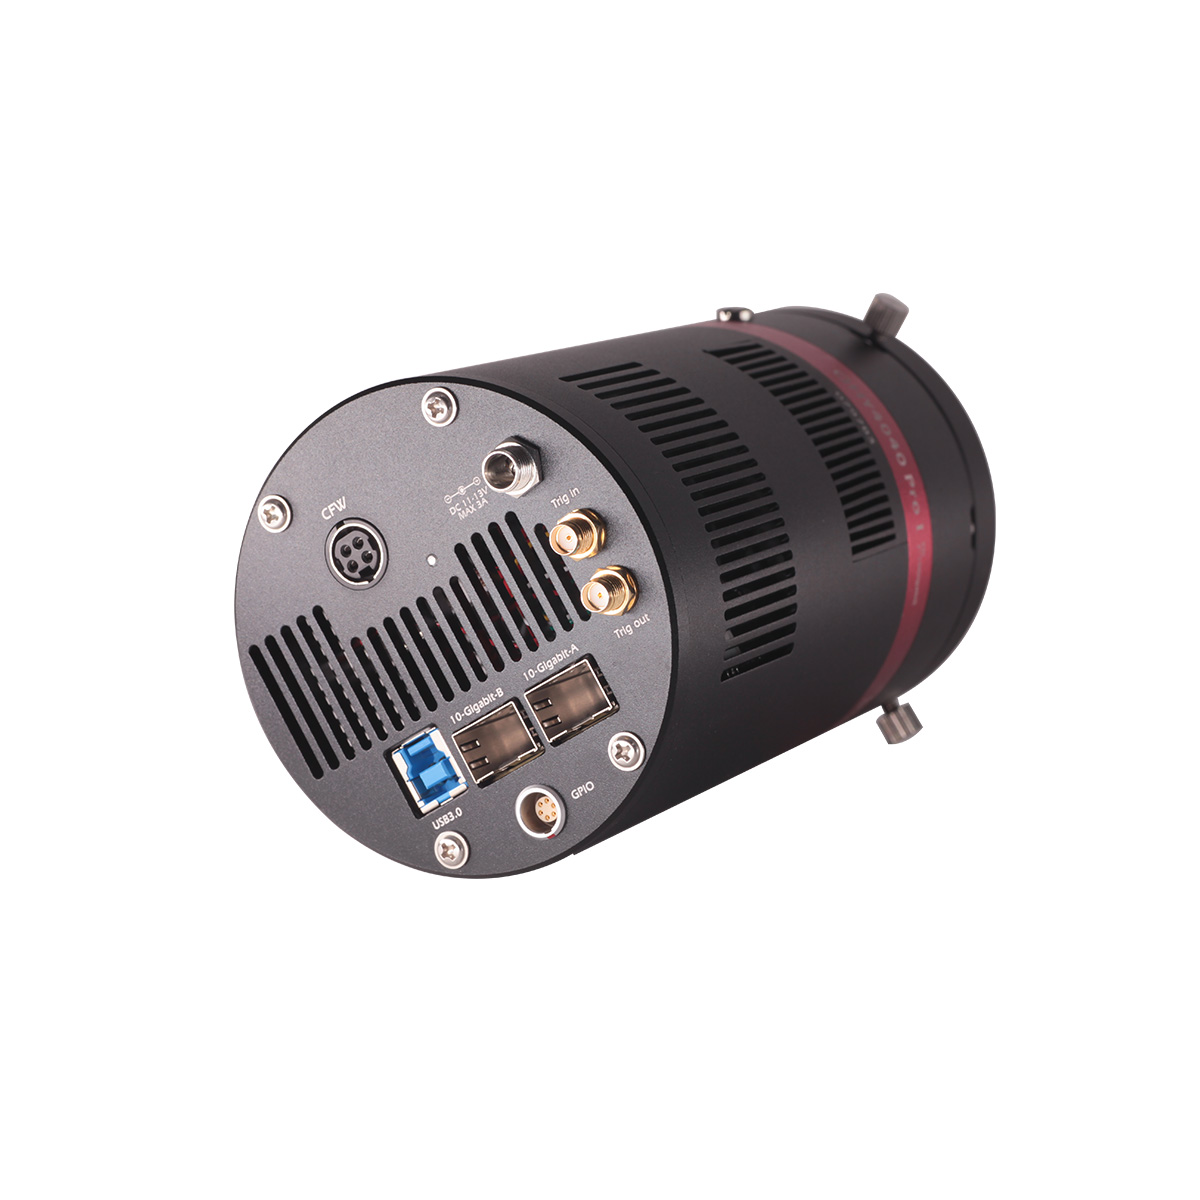 QHY4040/QHY4040 Pro I 科学科研级相机采用GSENSE4040FSI 芯片。9μm大像元尺寸，5T像元设计，具有86dB的高动态范围和3.96e-的低读出噪声，量子效率为74% @ 600nm。